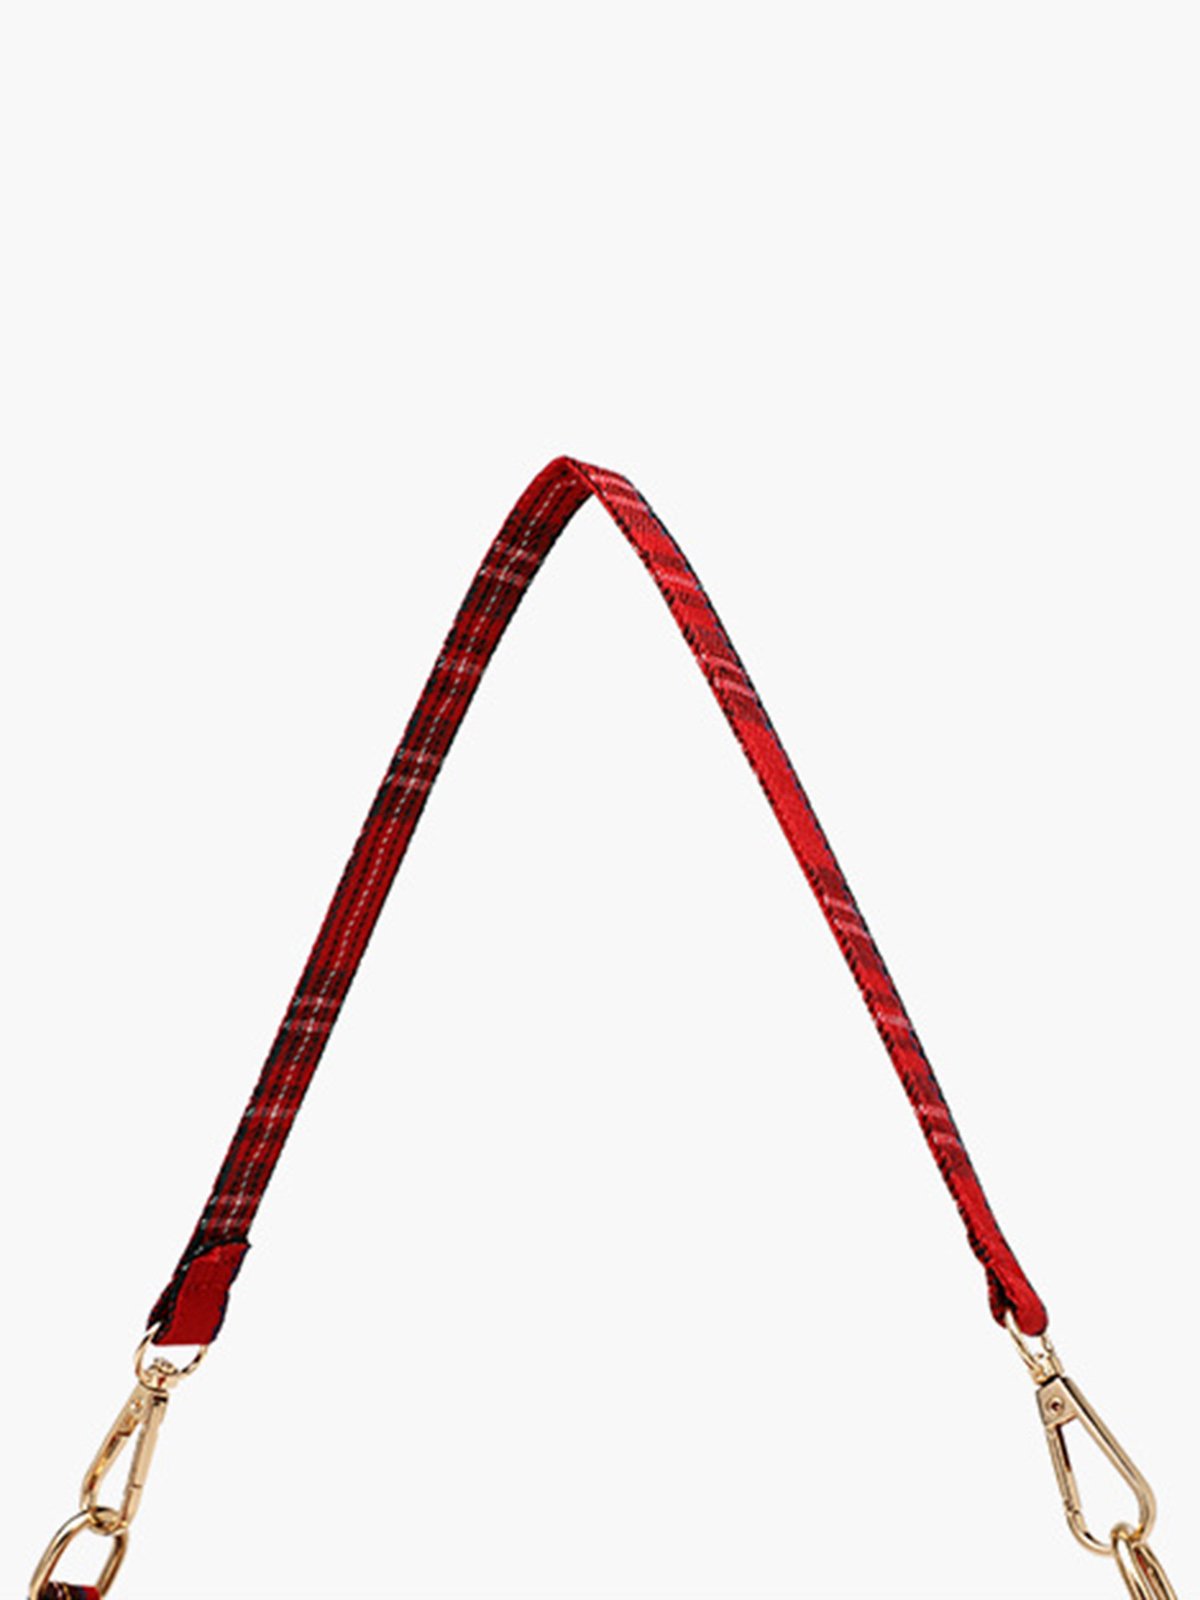 Christmas Red Plaid Casual Canvas Underarm Baguette Bag